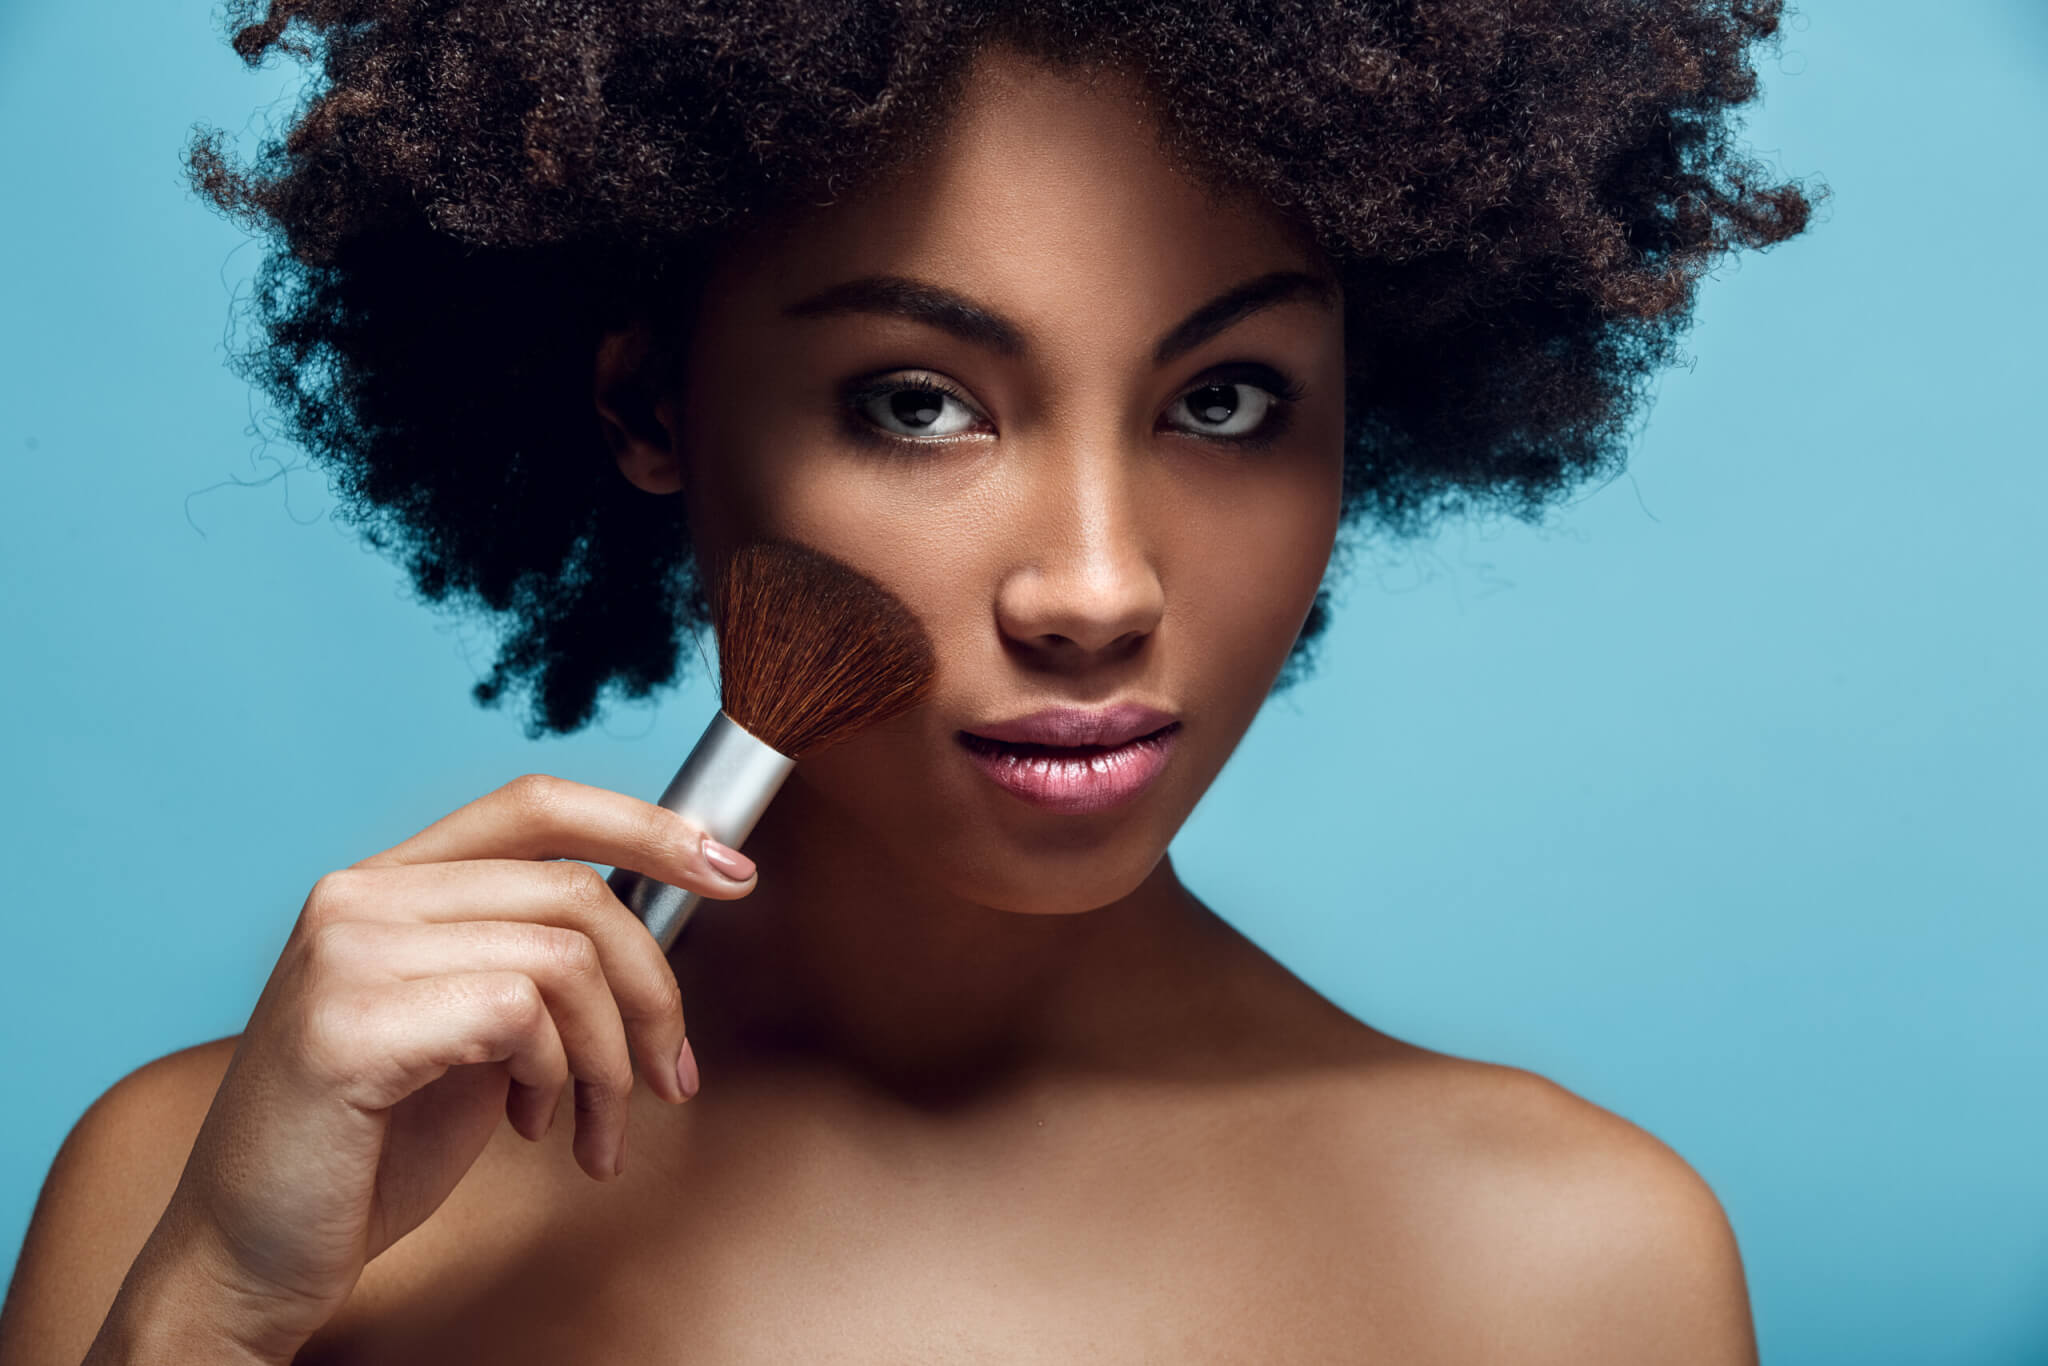 Black woman applying makeup